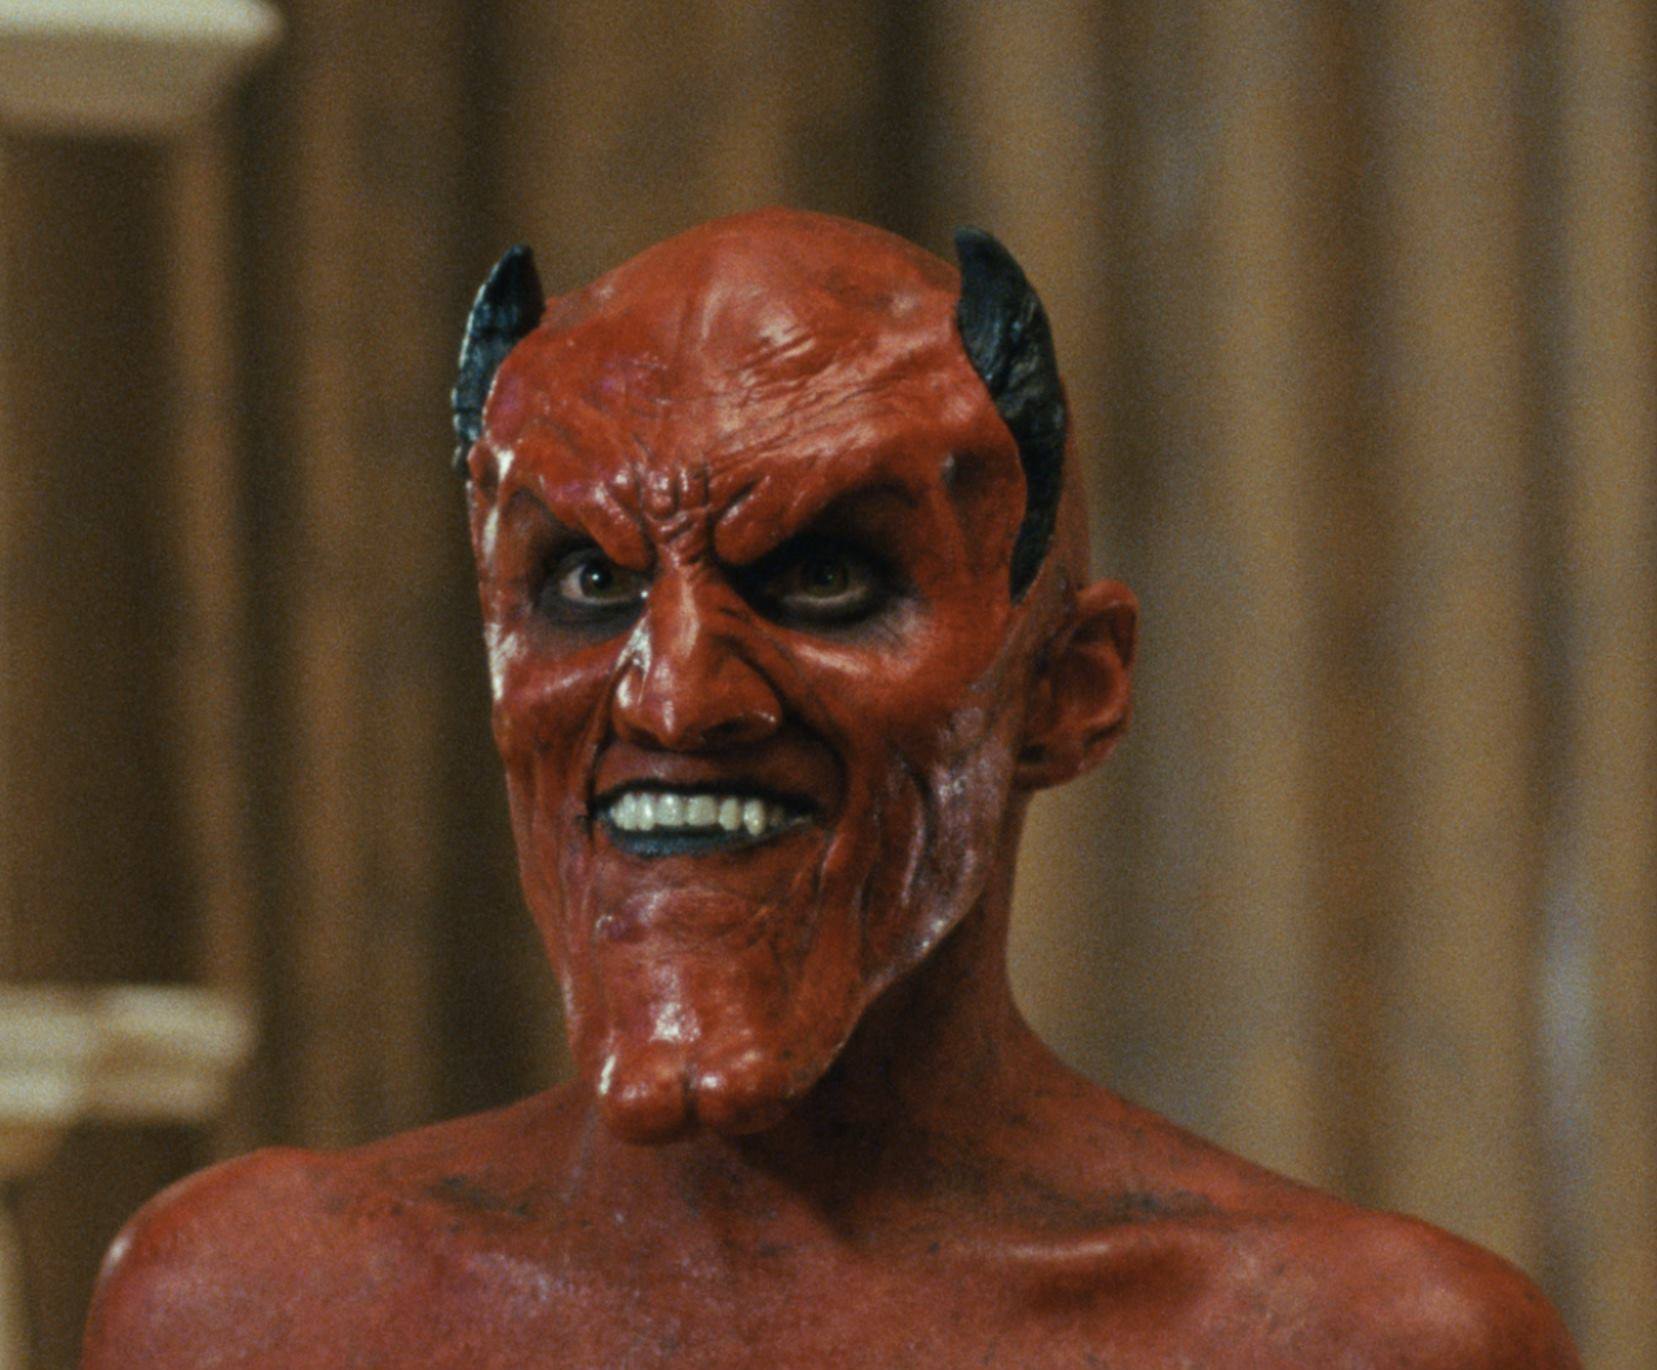 Luke Goodall as the devil in Shaun McCarthy's short film 'The boy who had no thumbs'.